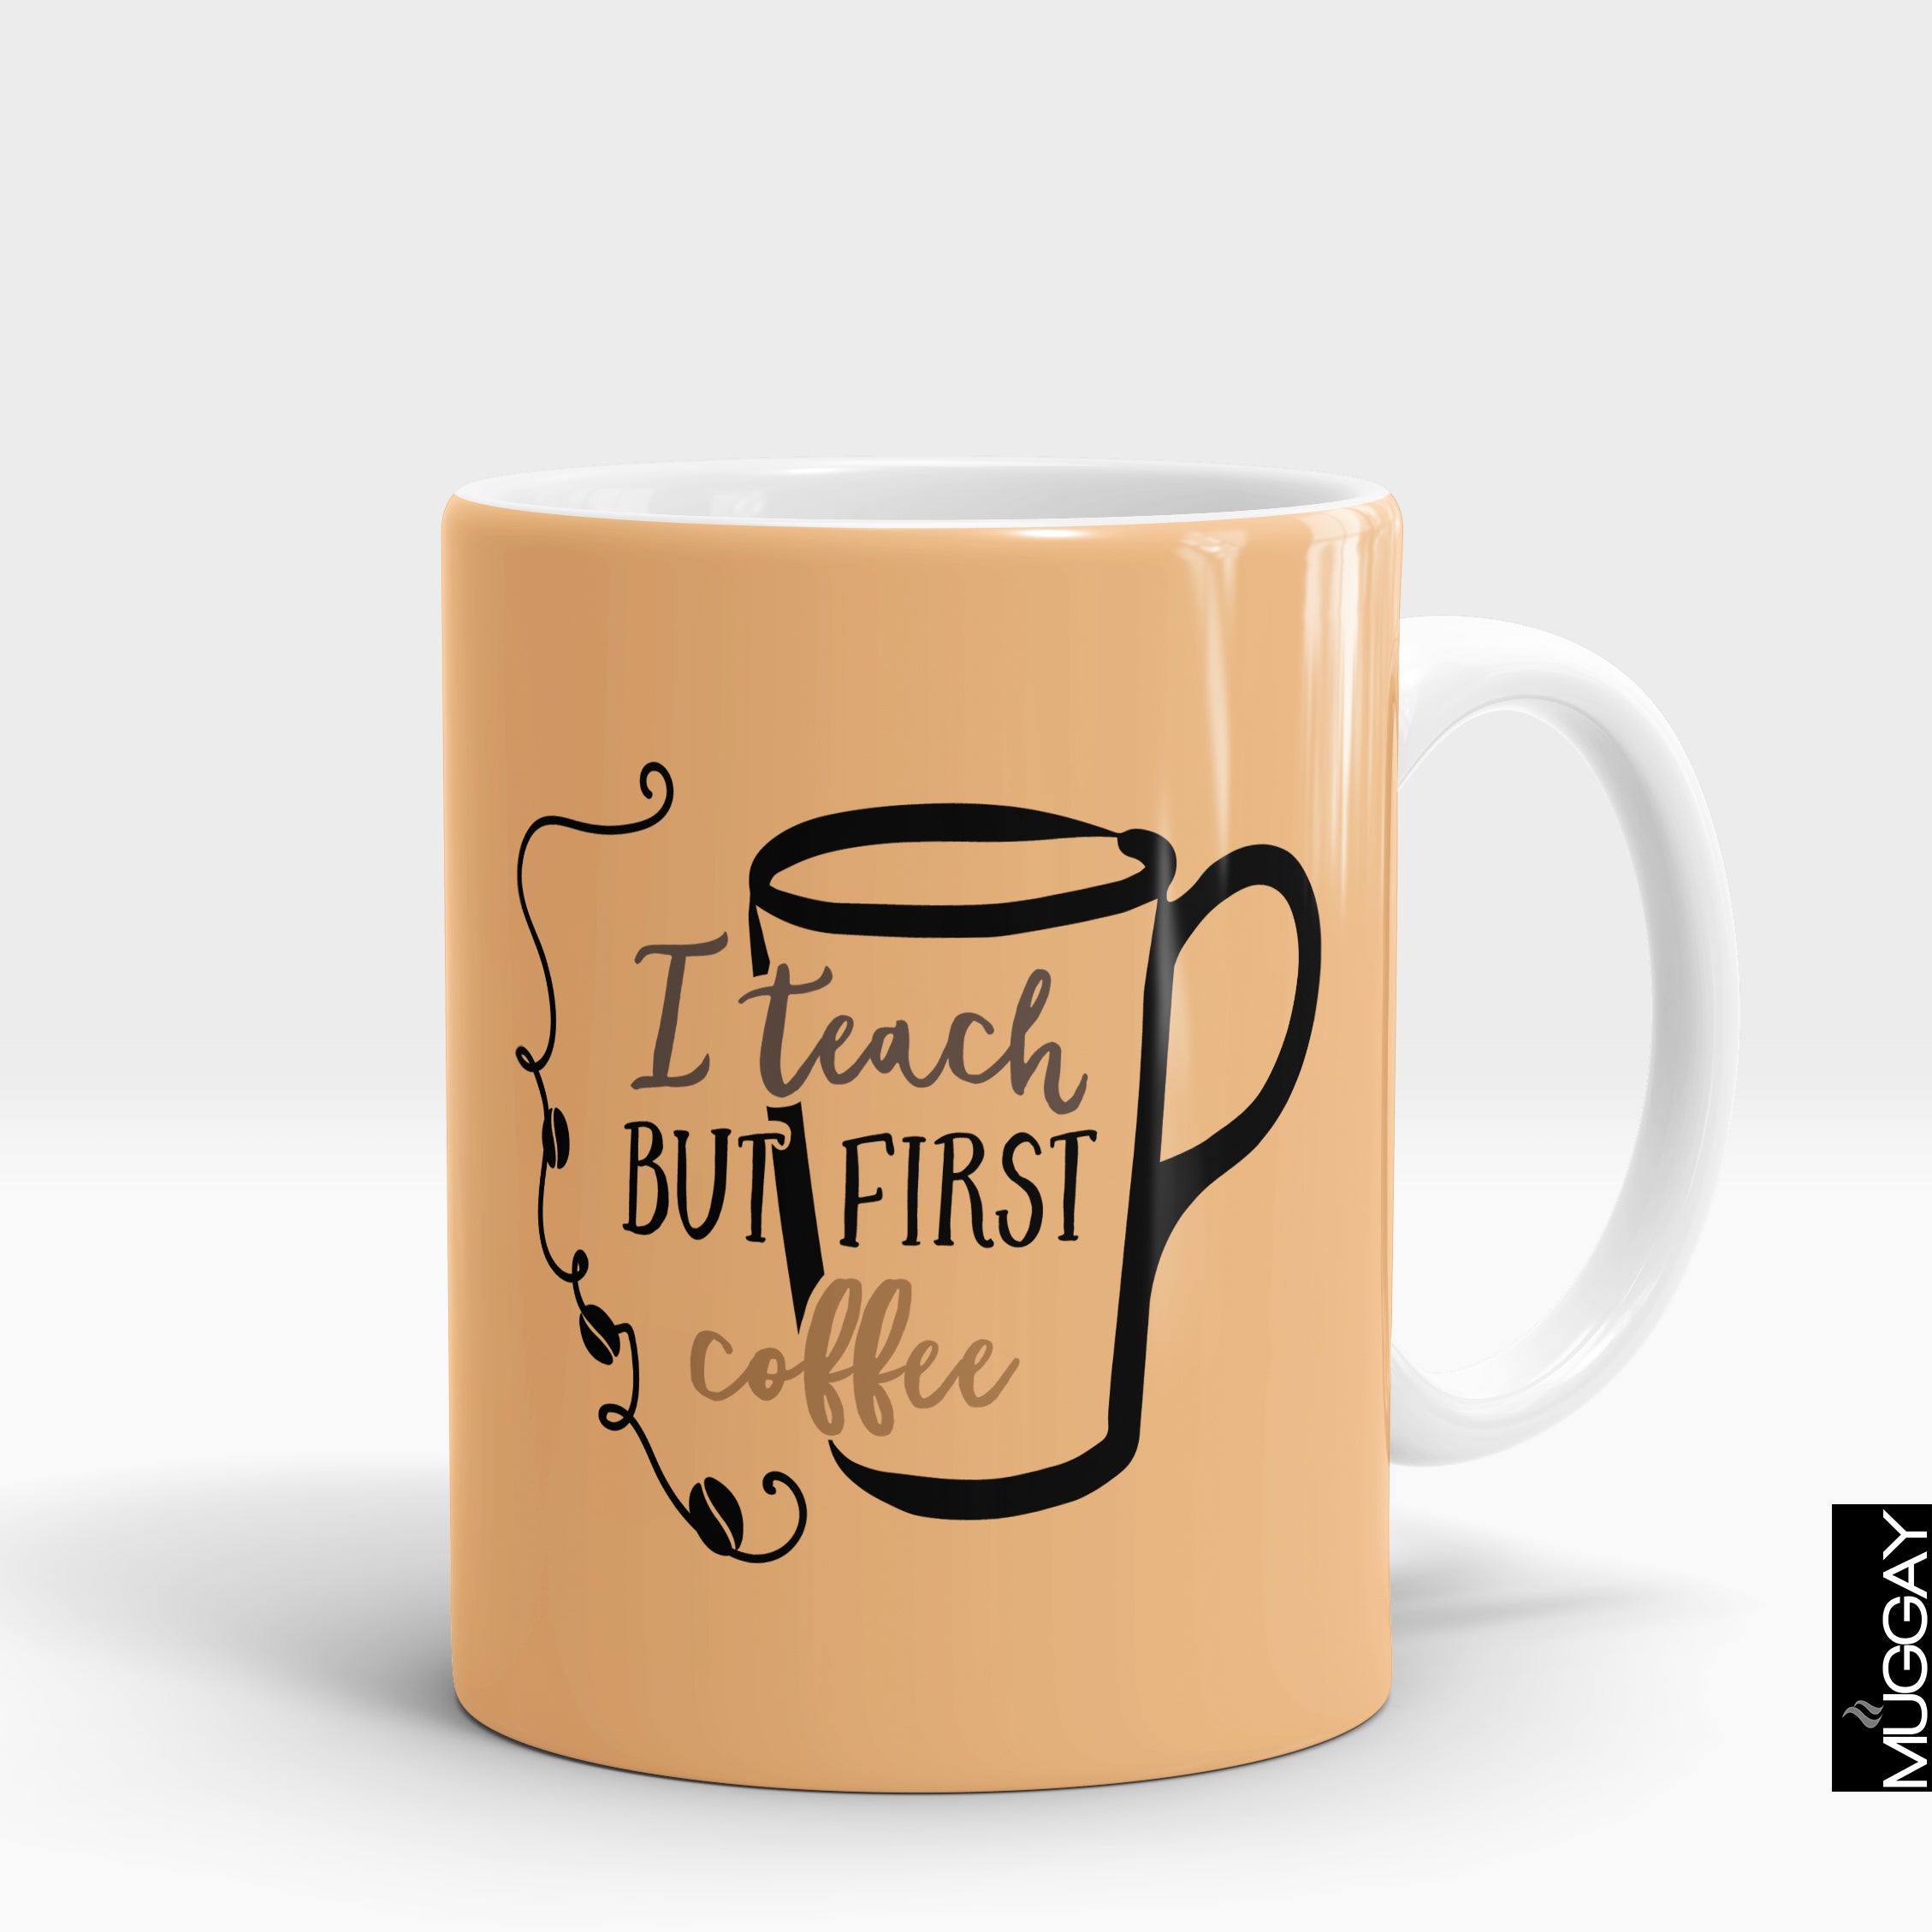 I teach but first coffee